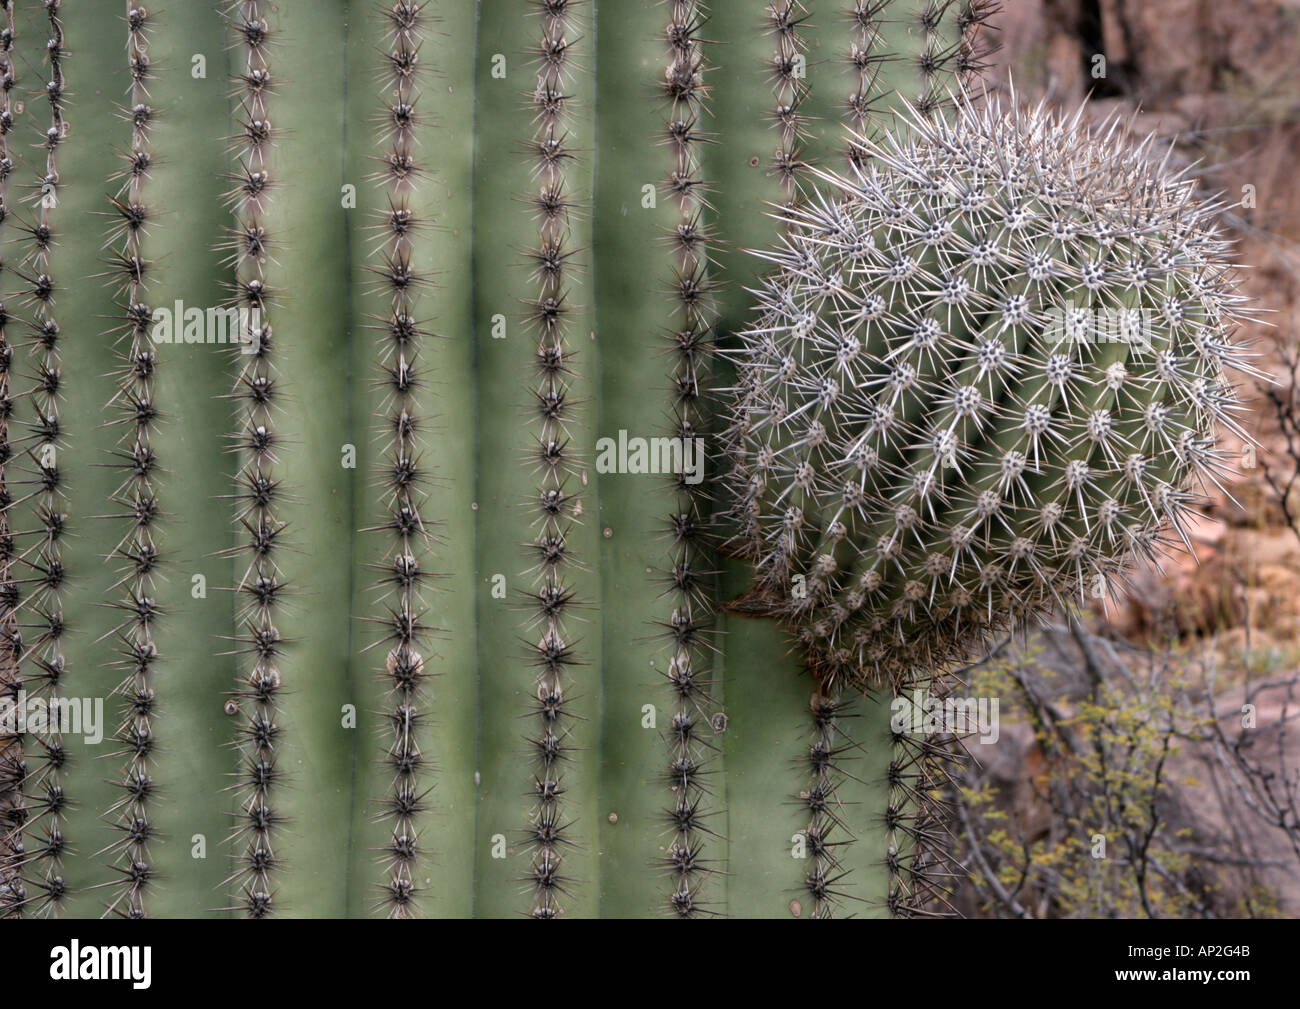 Saguaro Cactus (Carnegiea gigantea) Arizona USA Stock Photo